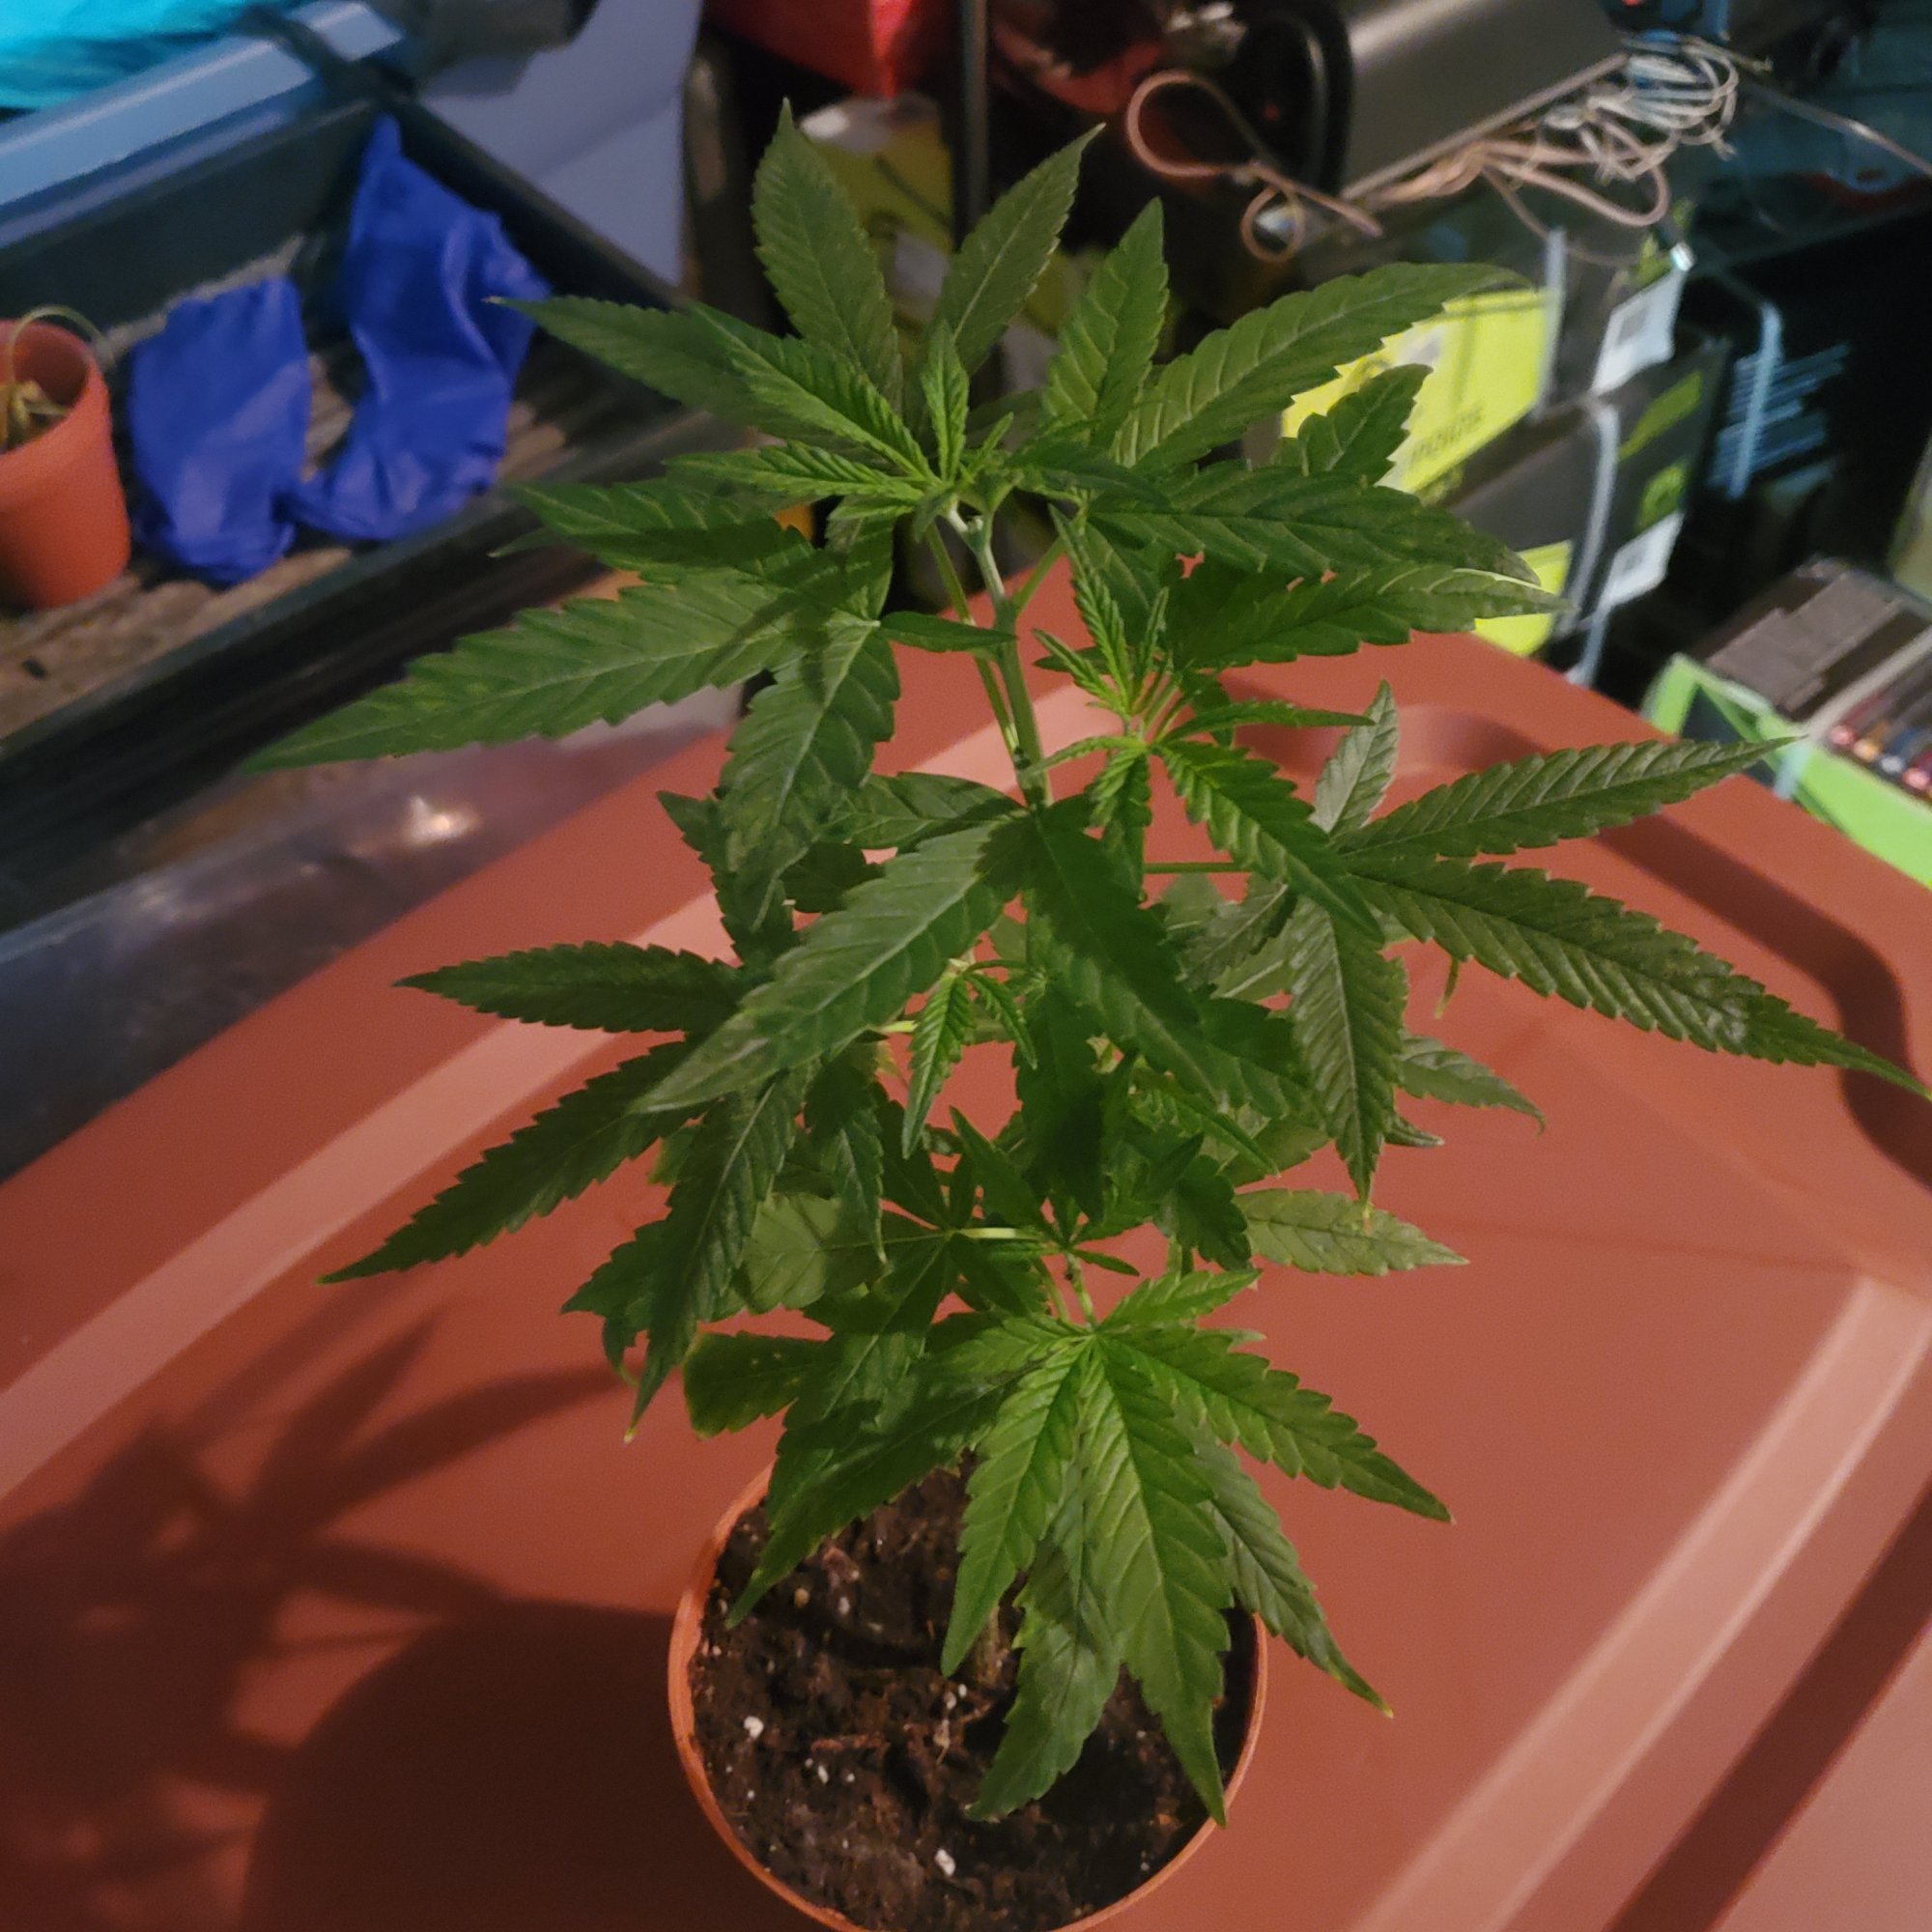 I need advice on growing mother plants